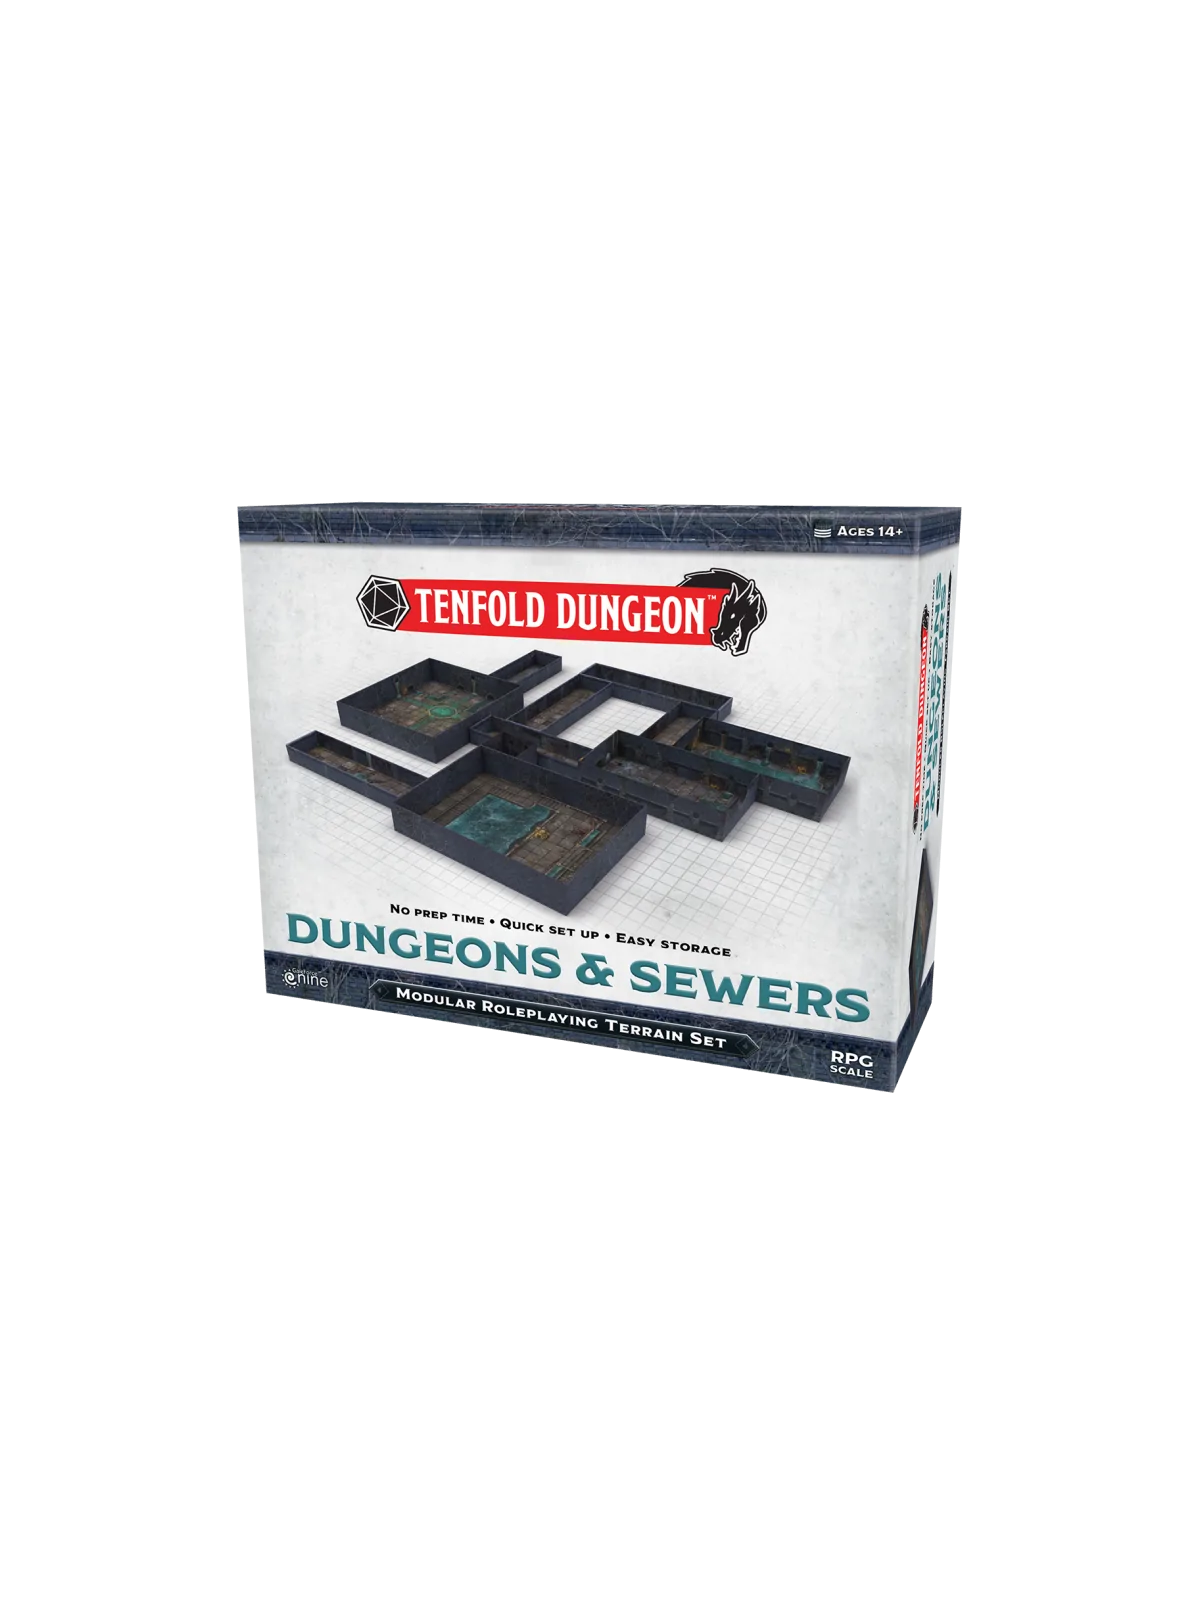 Comprar Tenfold Dungeon: Dungeons & Sewers (Inglés) barato al mejor pr